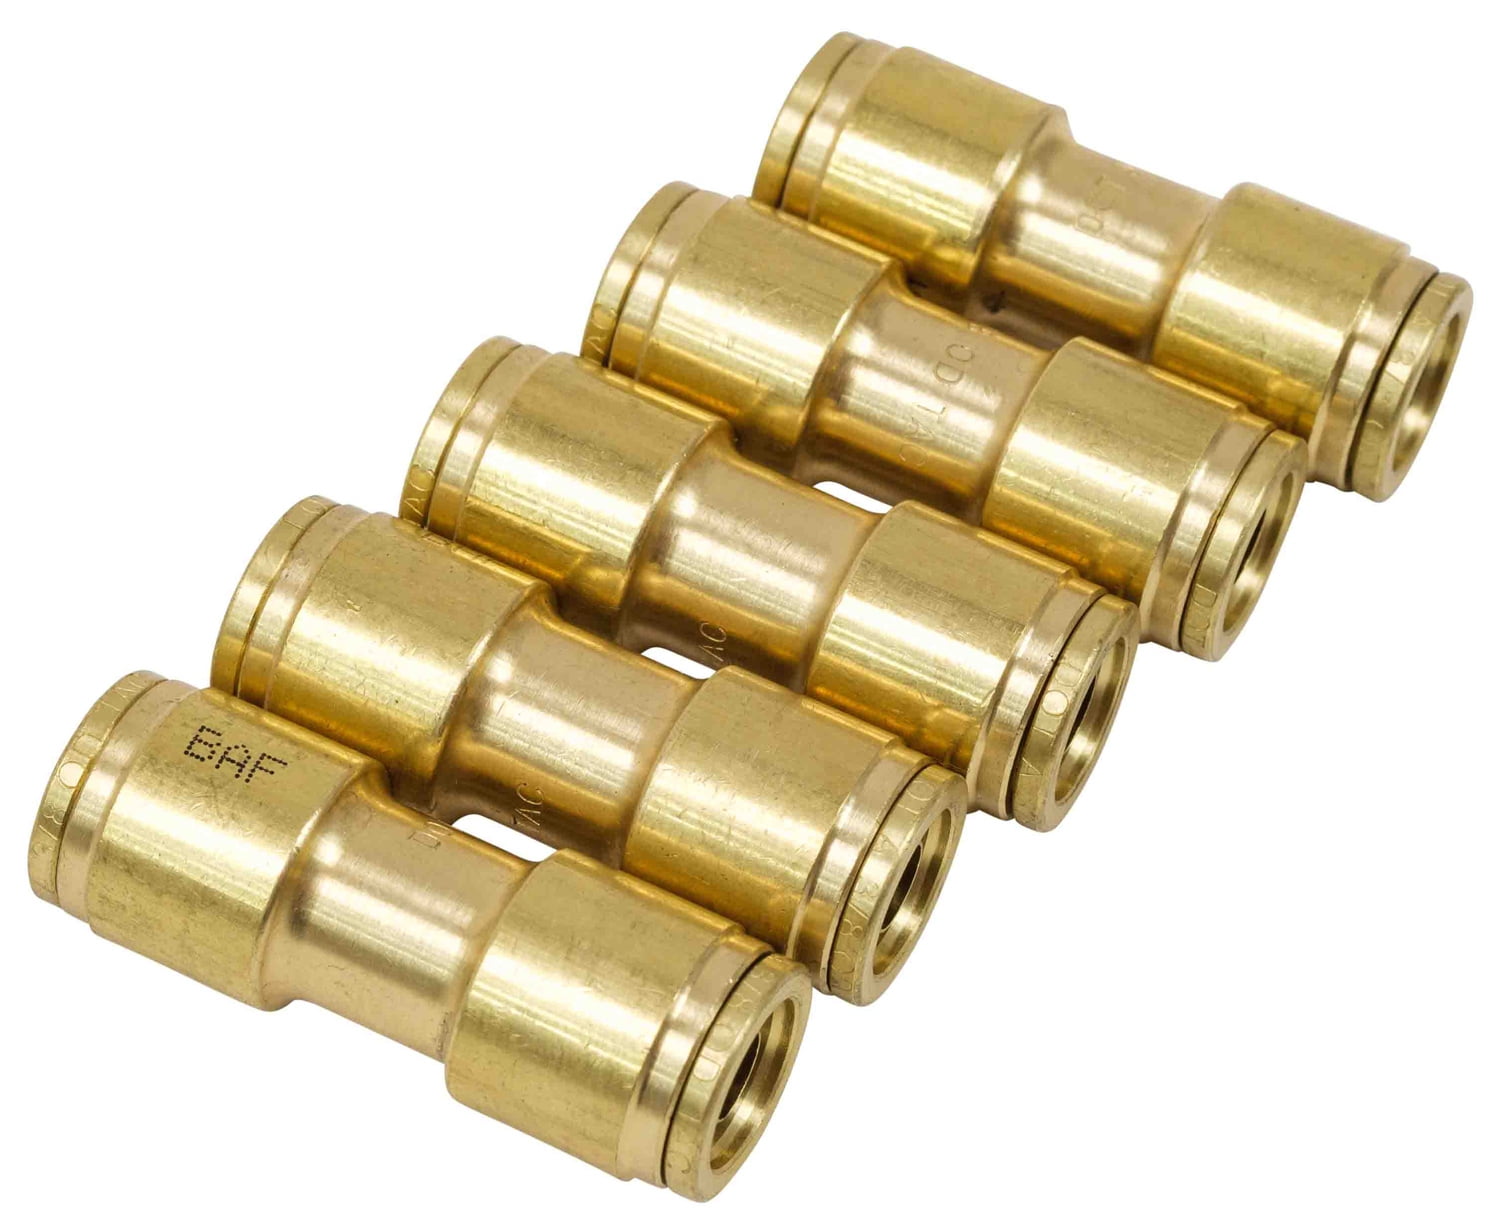 Legines Brass Compression Tube Fitting, Union, 1/4 OD x 1/4 OD